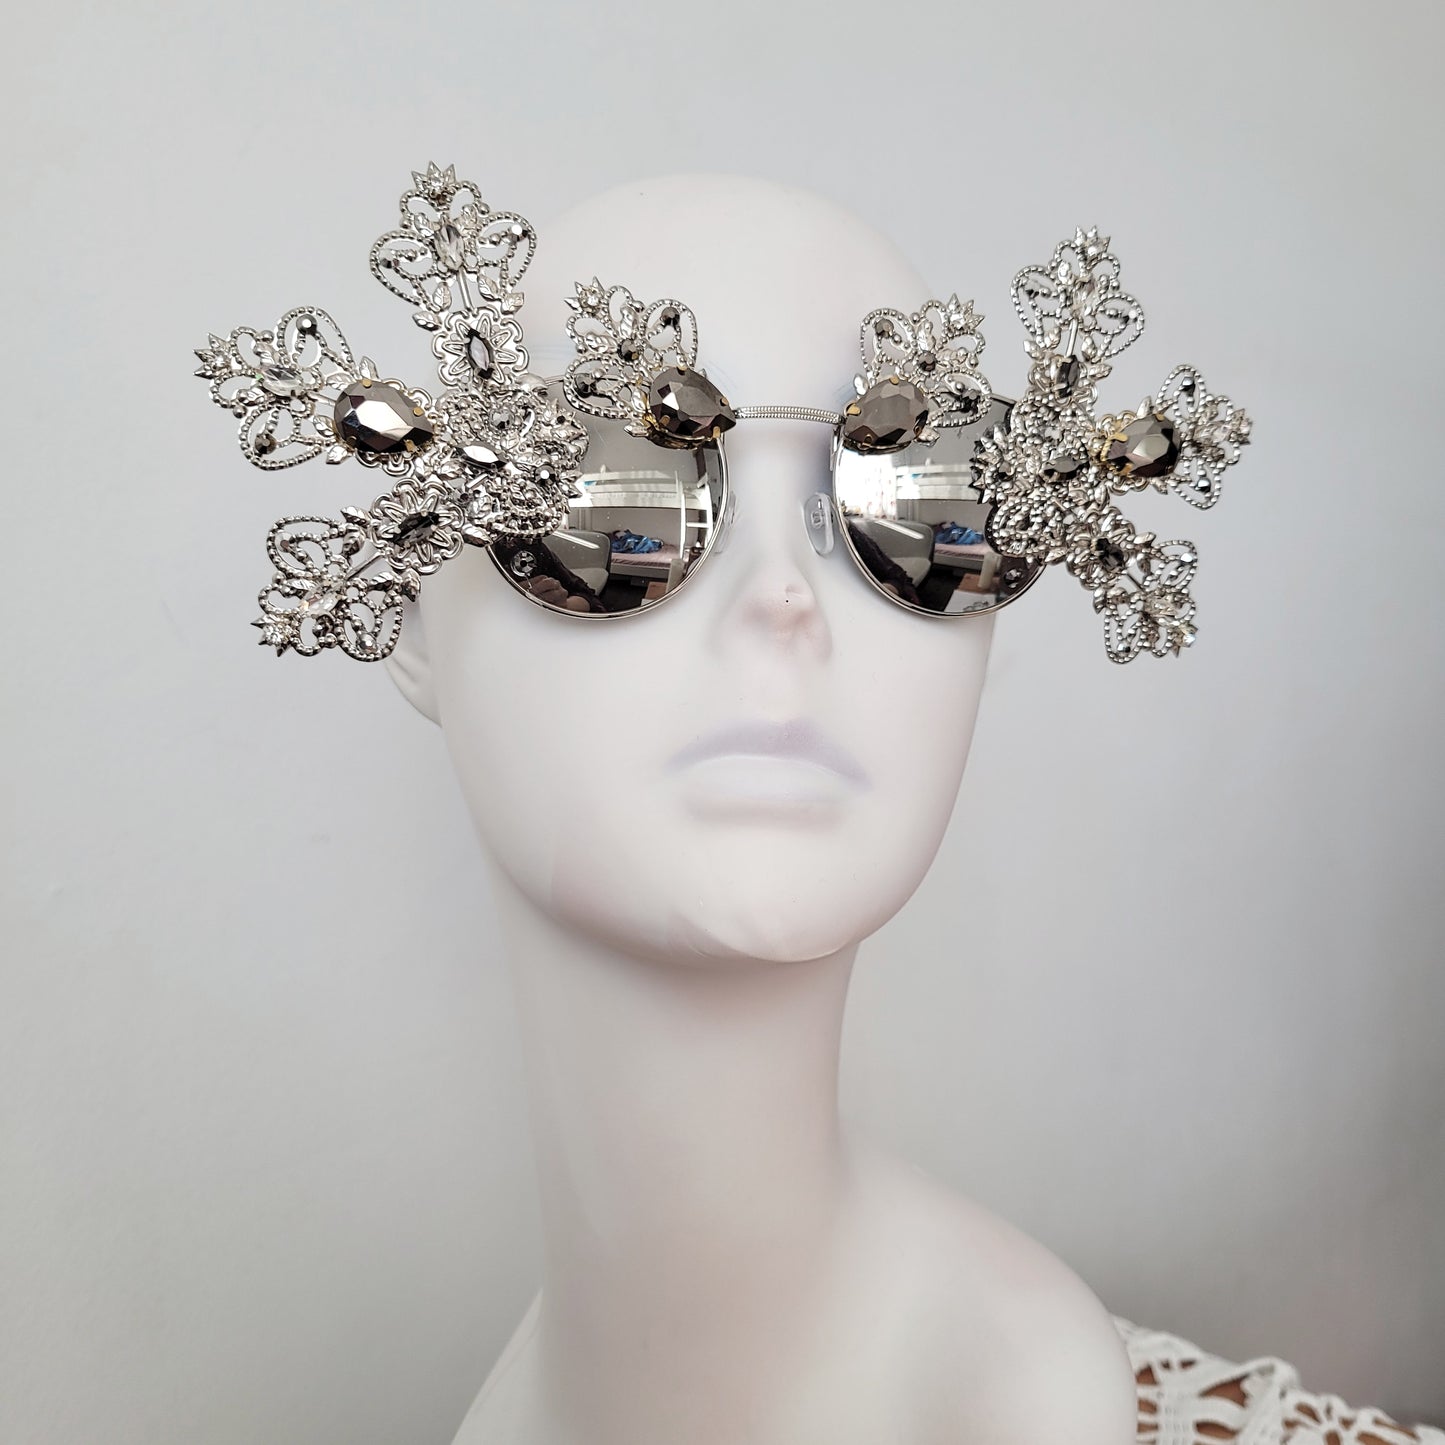 Liquid Mercury Collection: The Mercury Outburst showpiece sunglasses